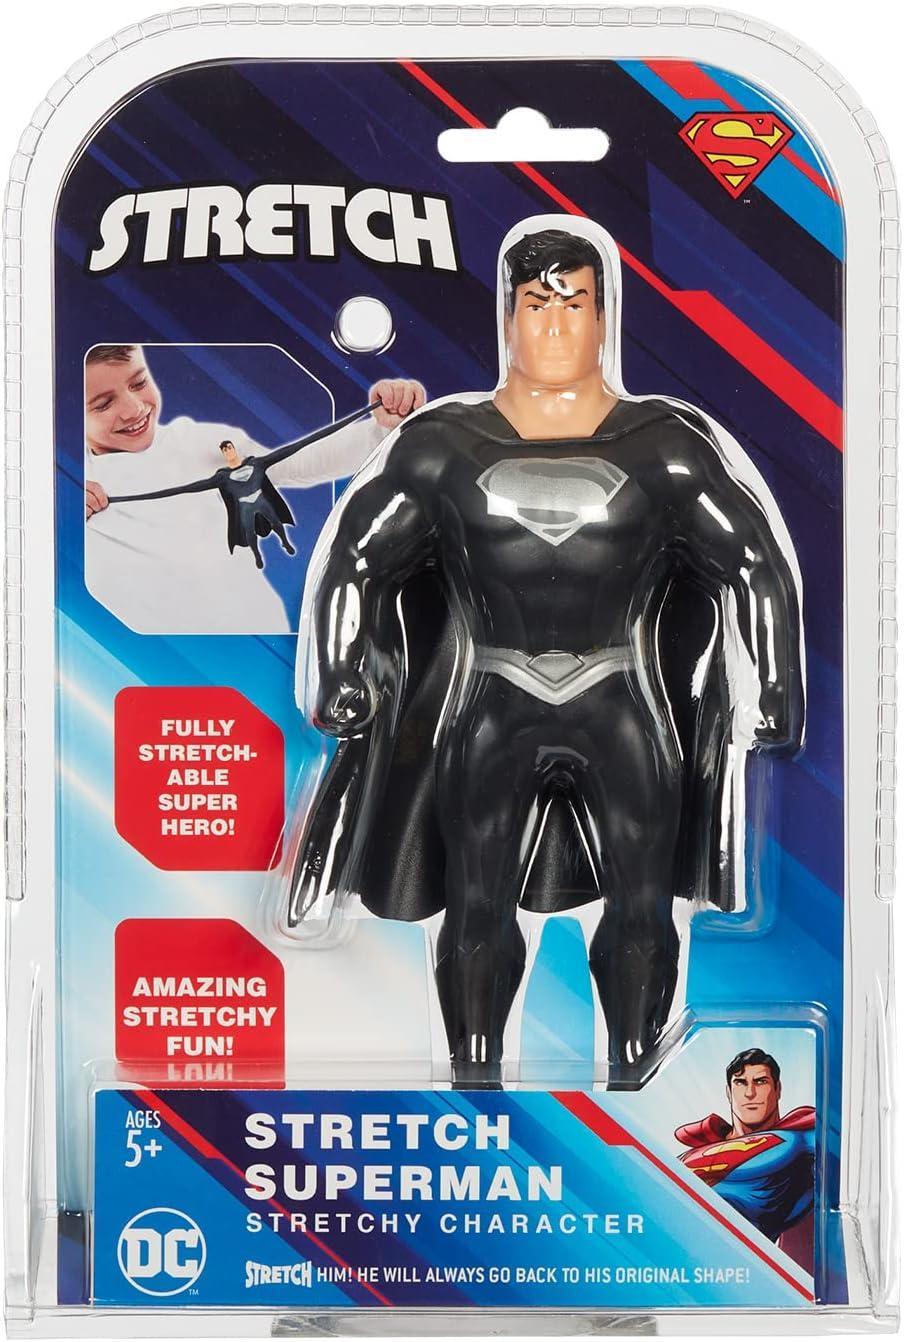 rocco giocattoli superman stretch